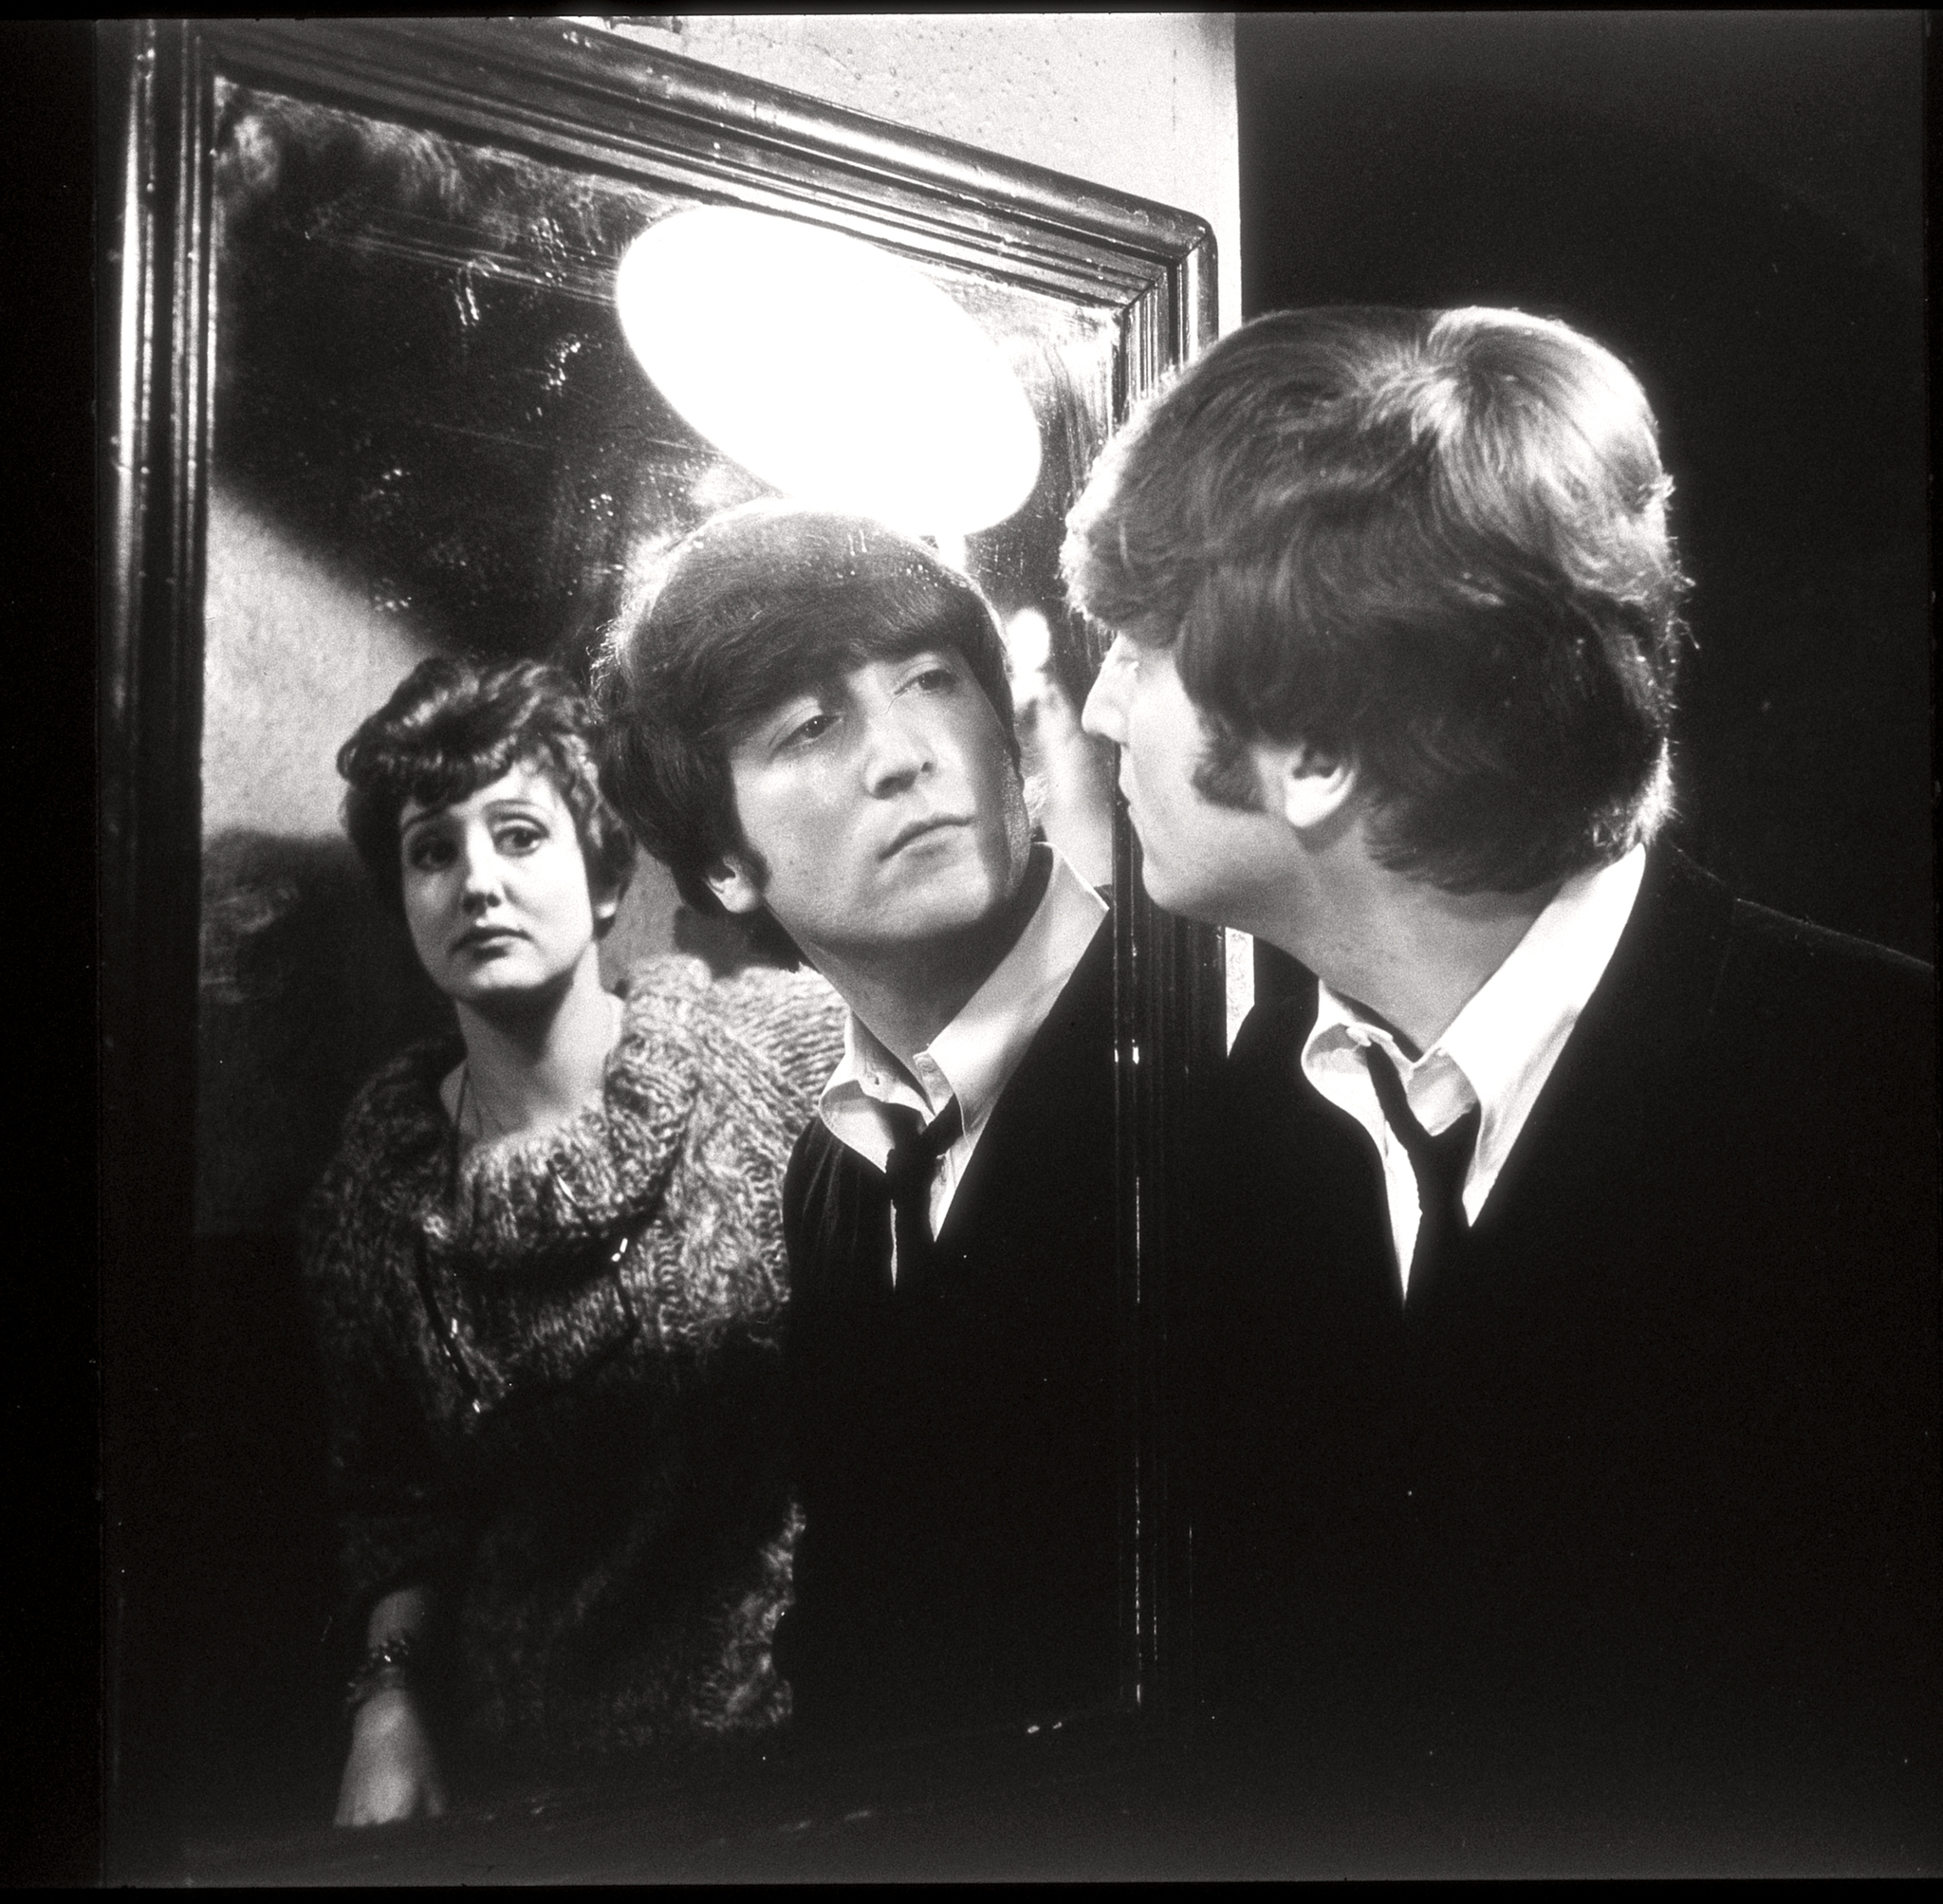 Still of John Lennon in A Hard Day's Night (1964)